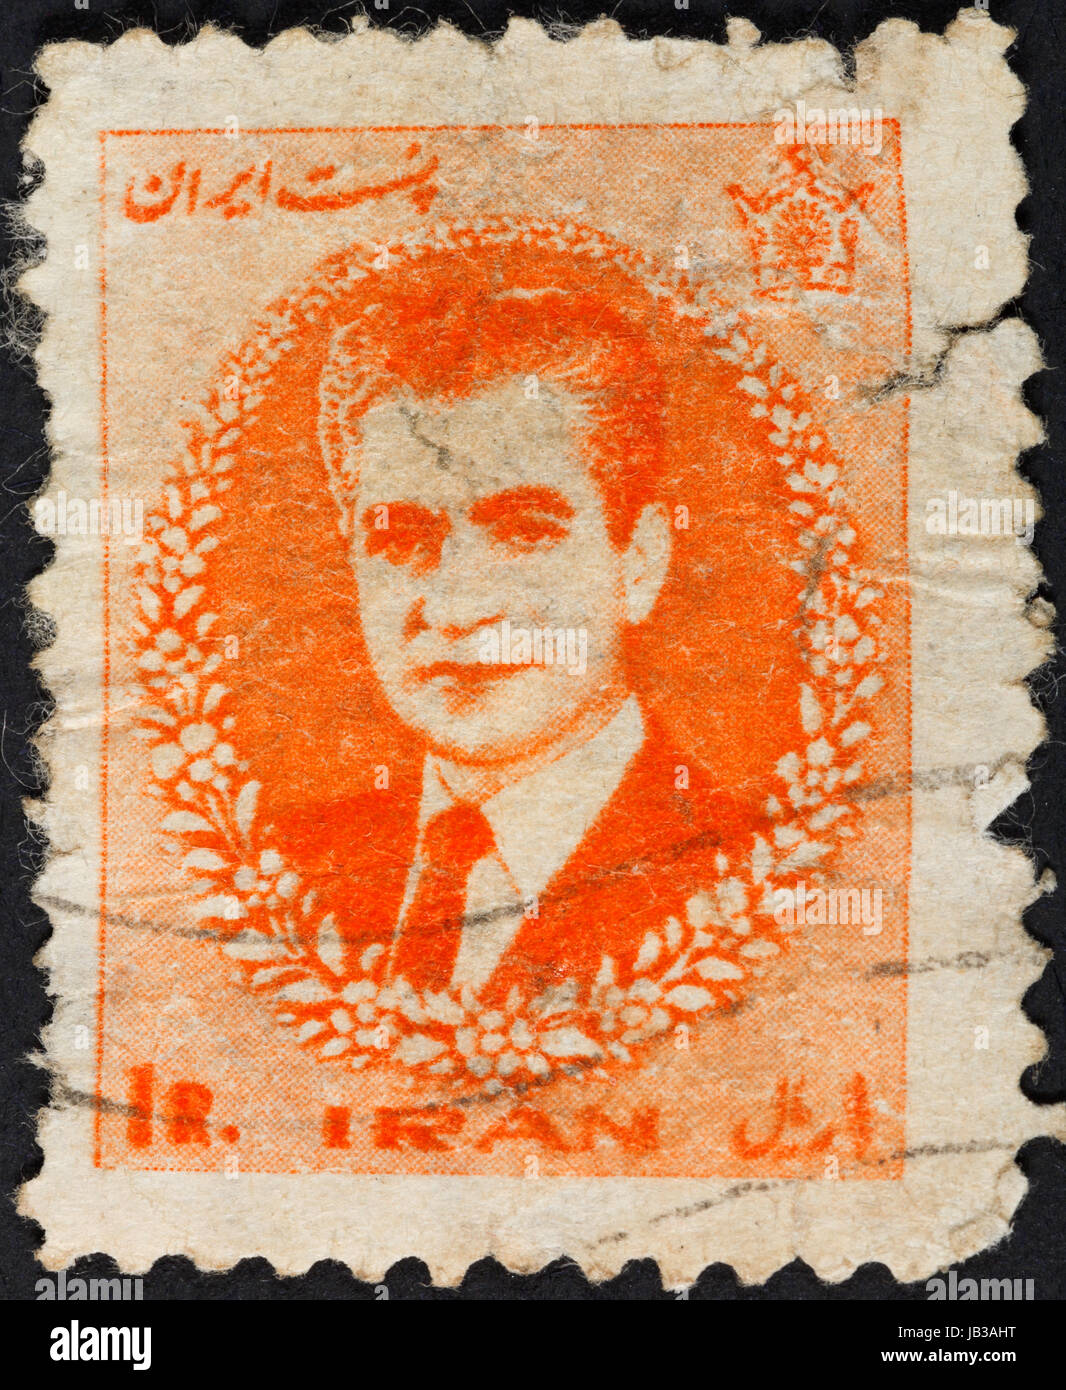 IRAN - CIRCA 1966: A postage stamp printed in the Iran shows Mohammad Reza Shah Pahlavi, Shah of Persia, circa 1966 Stock Photo